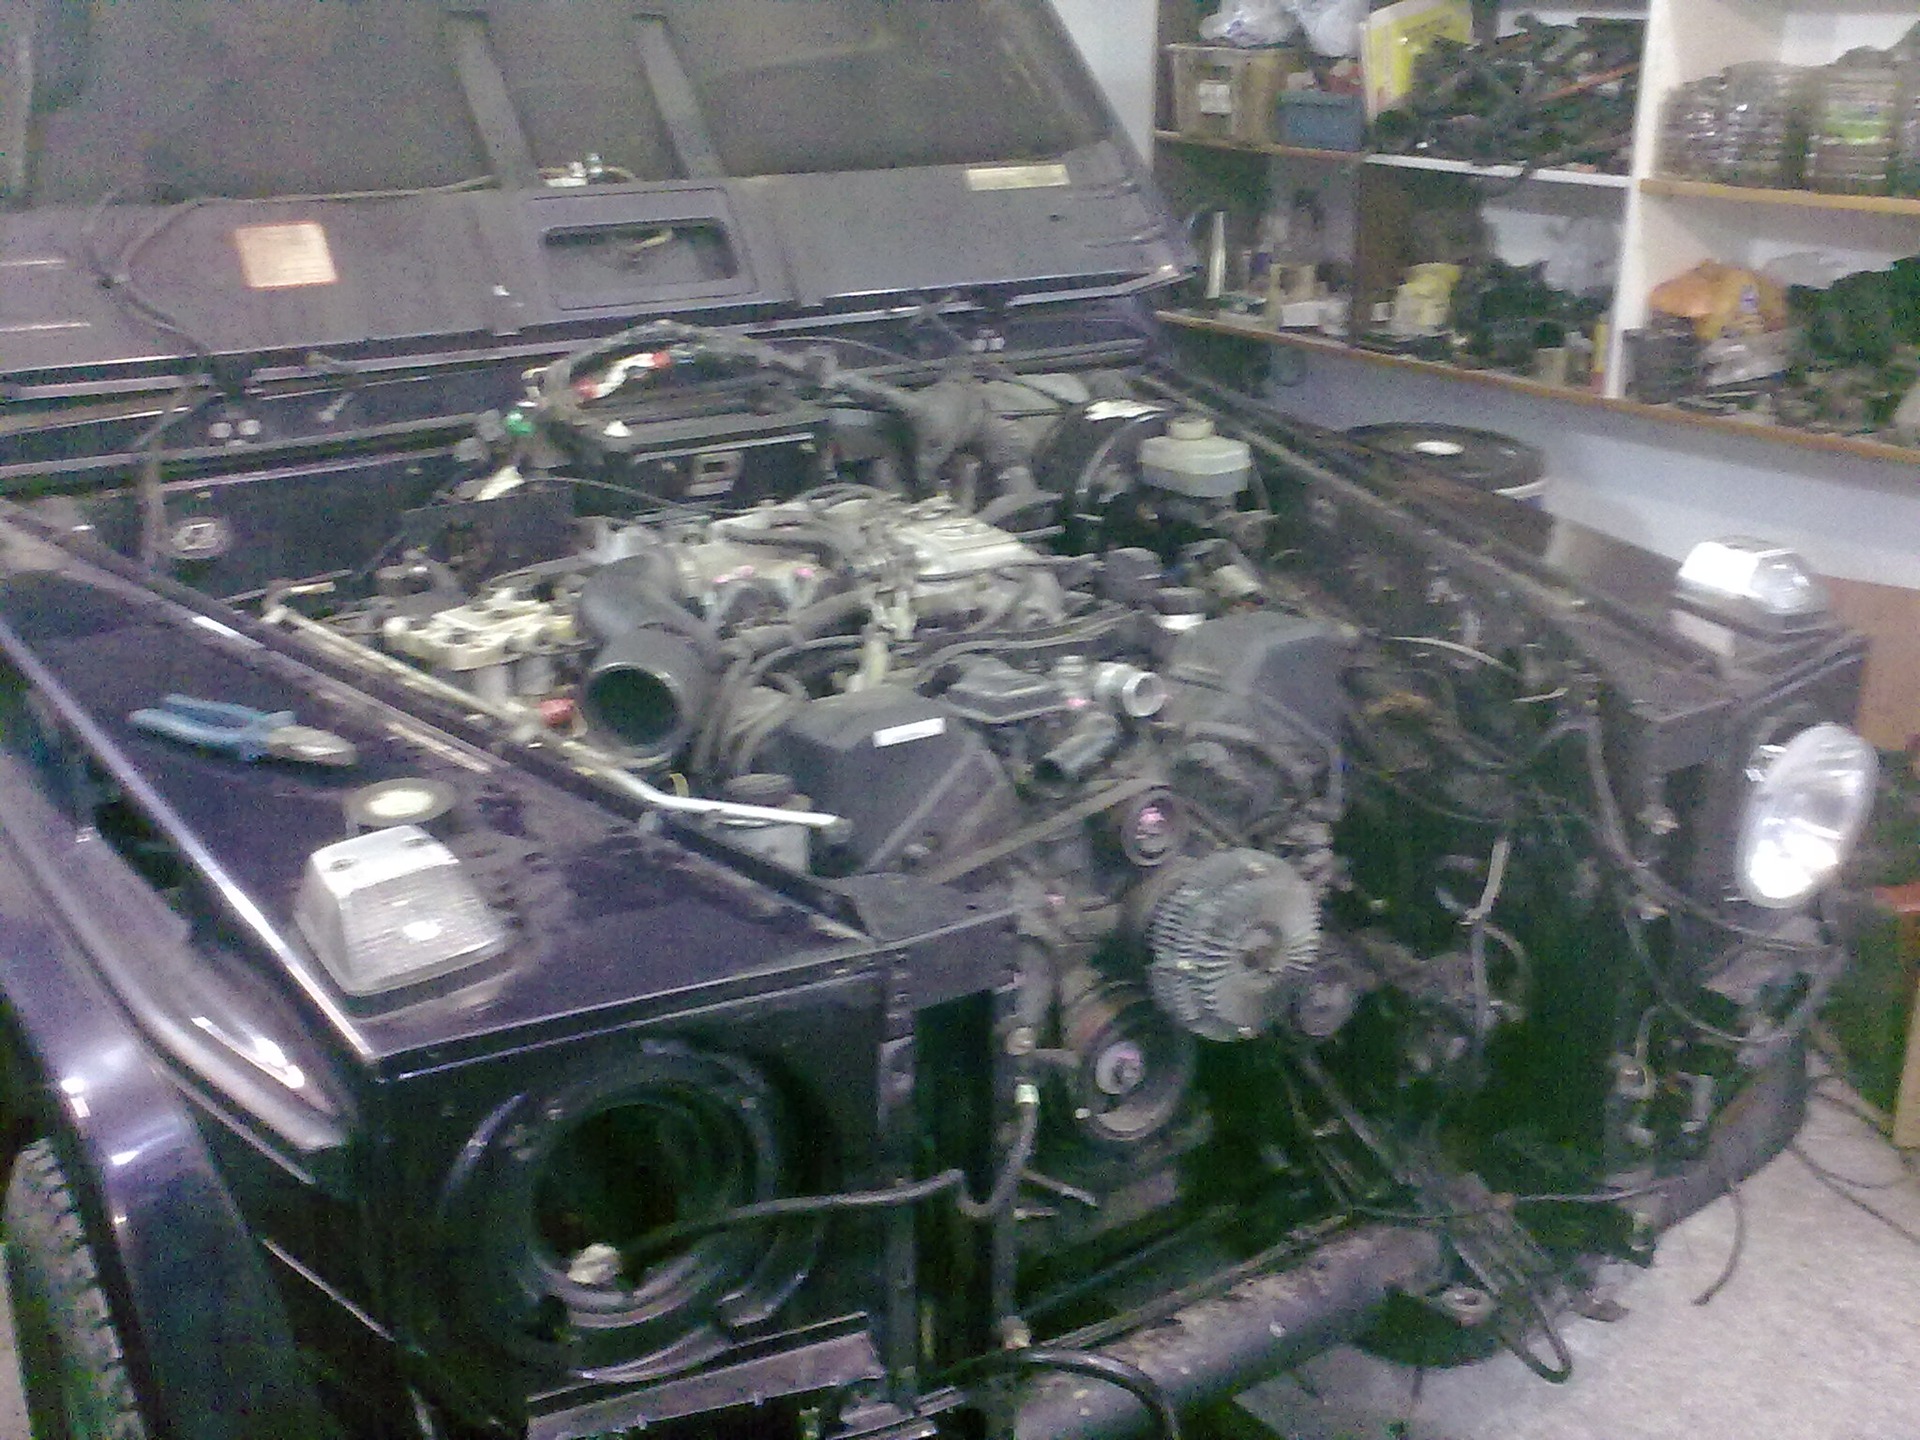 Мотор гелика. W463 3uz Fe. Мотор от Гелика 1995г. Mercedes-Benz g-class свап двигателя. Мотор мотор Гелика.